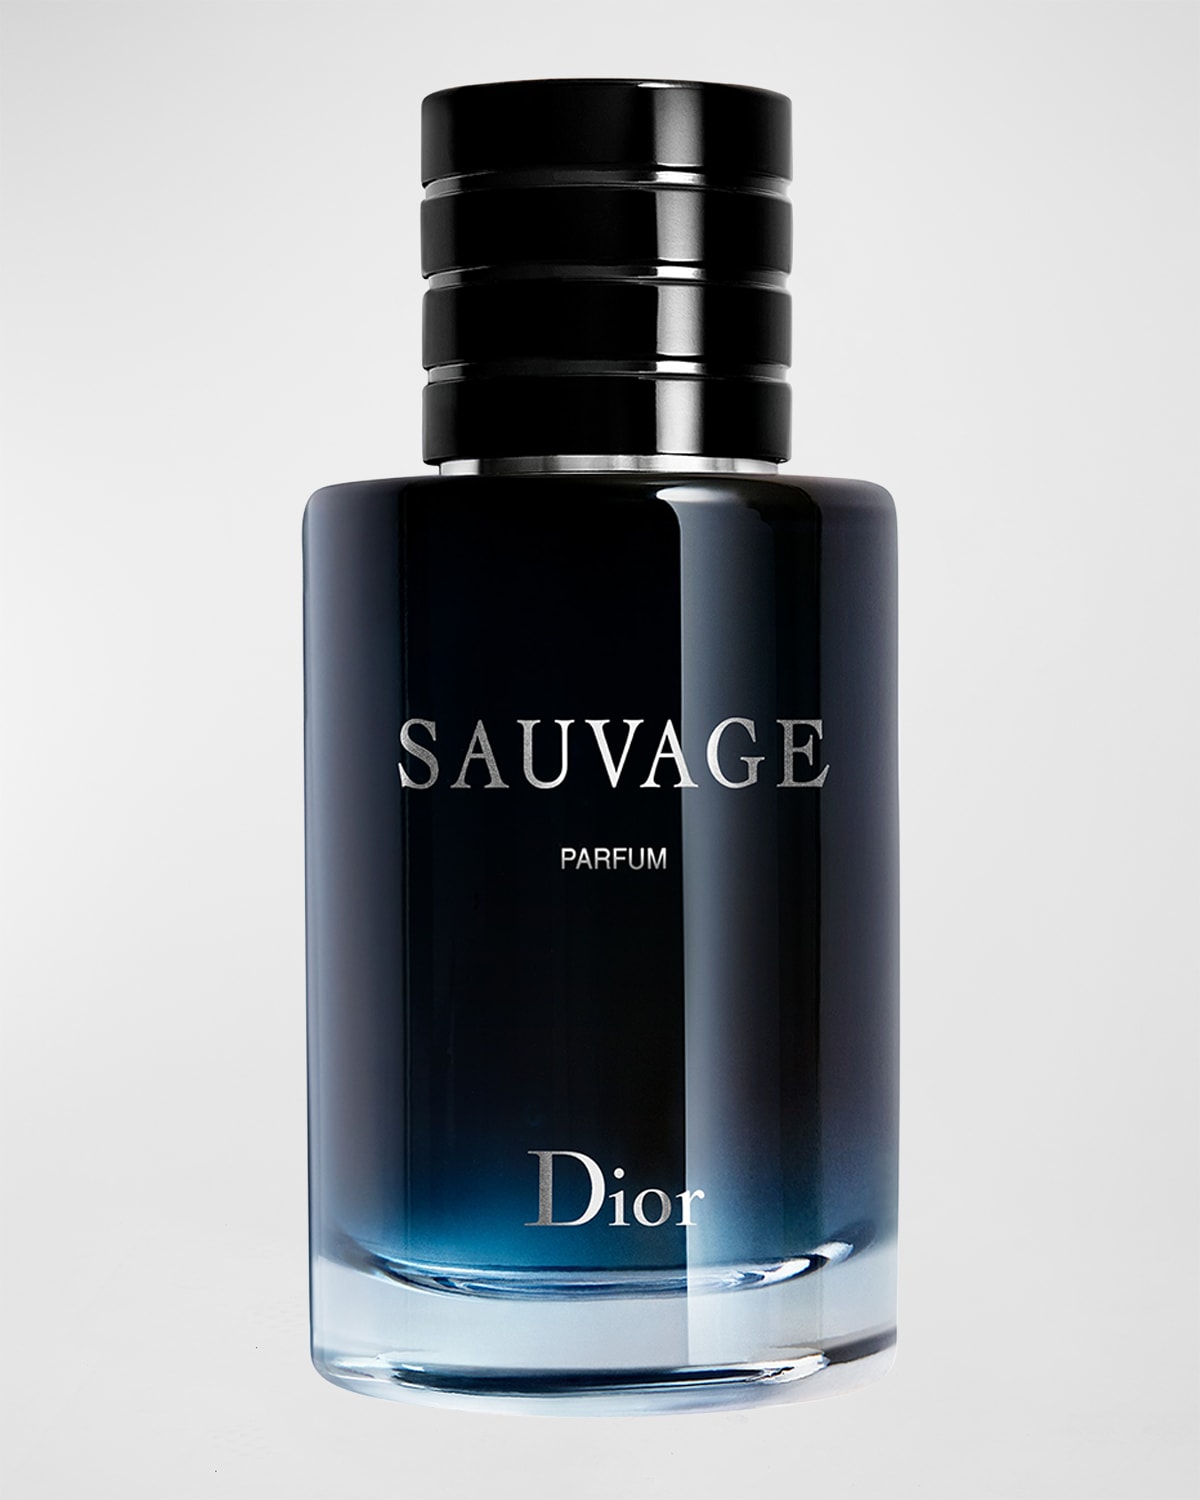 DIOR Sauvage Parfum, 2 oz.